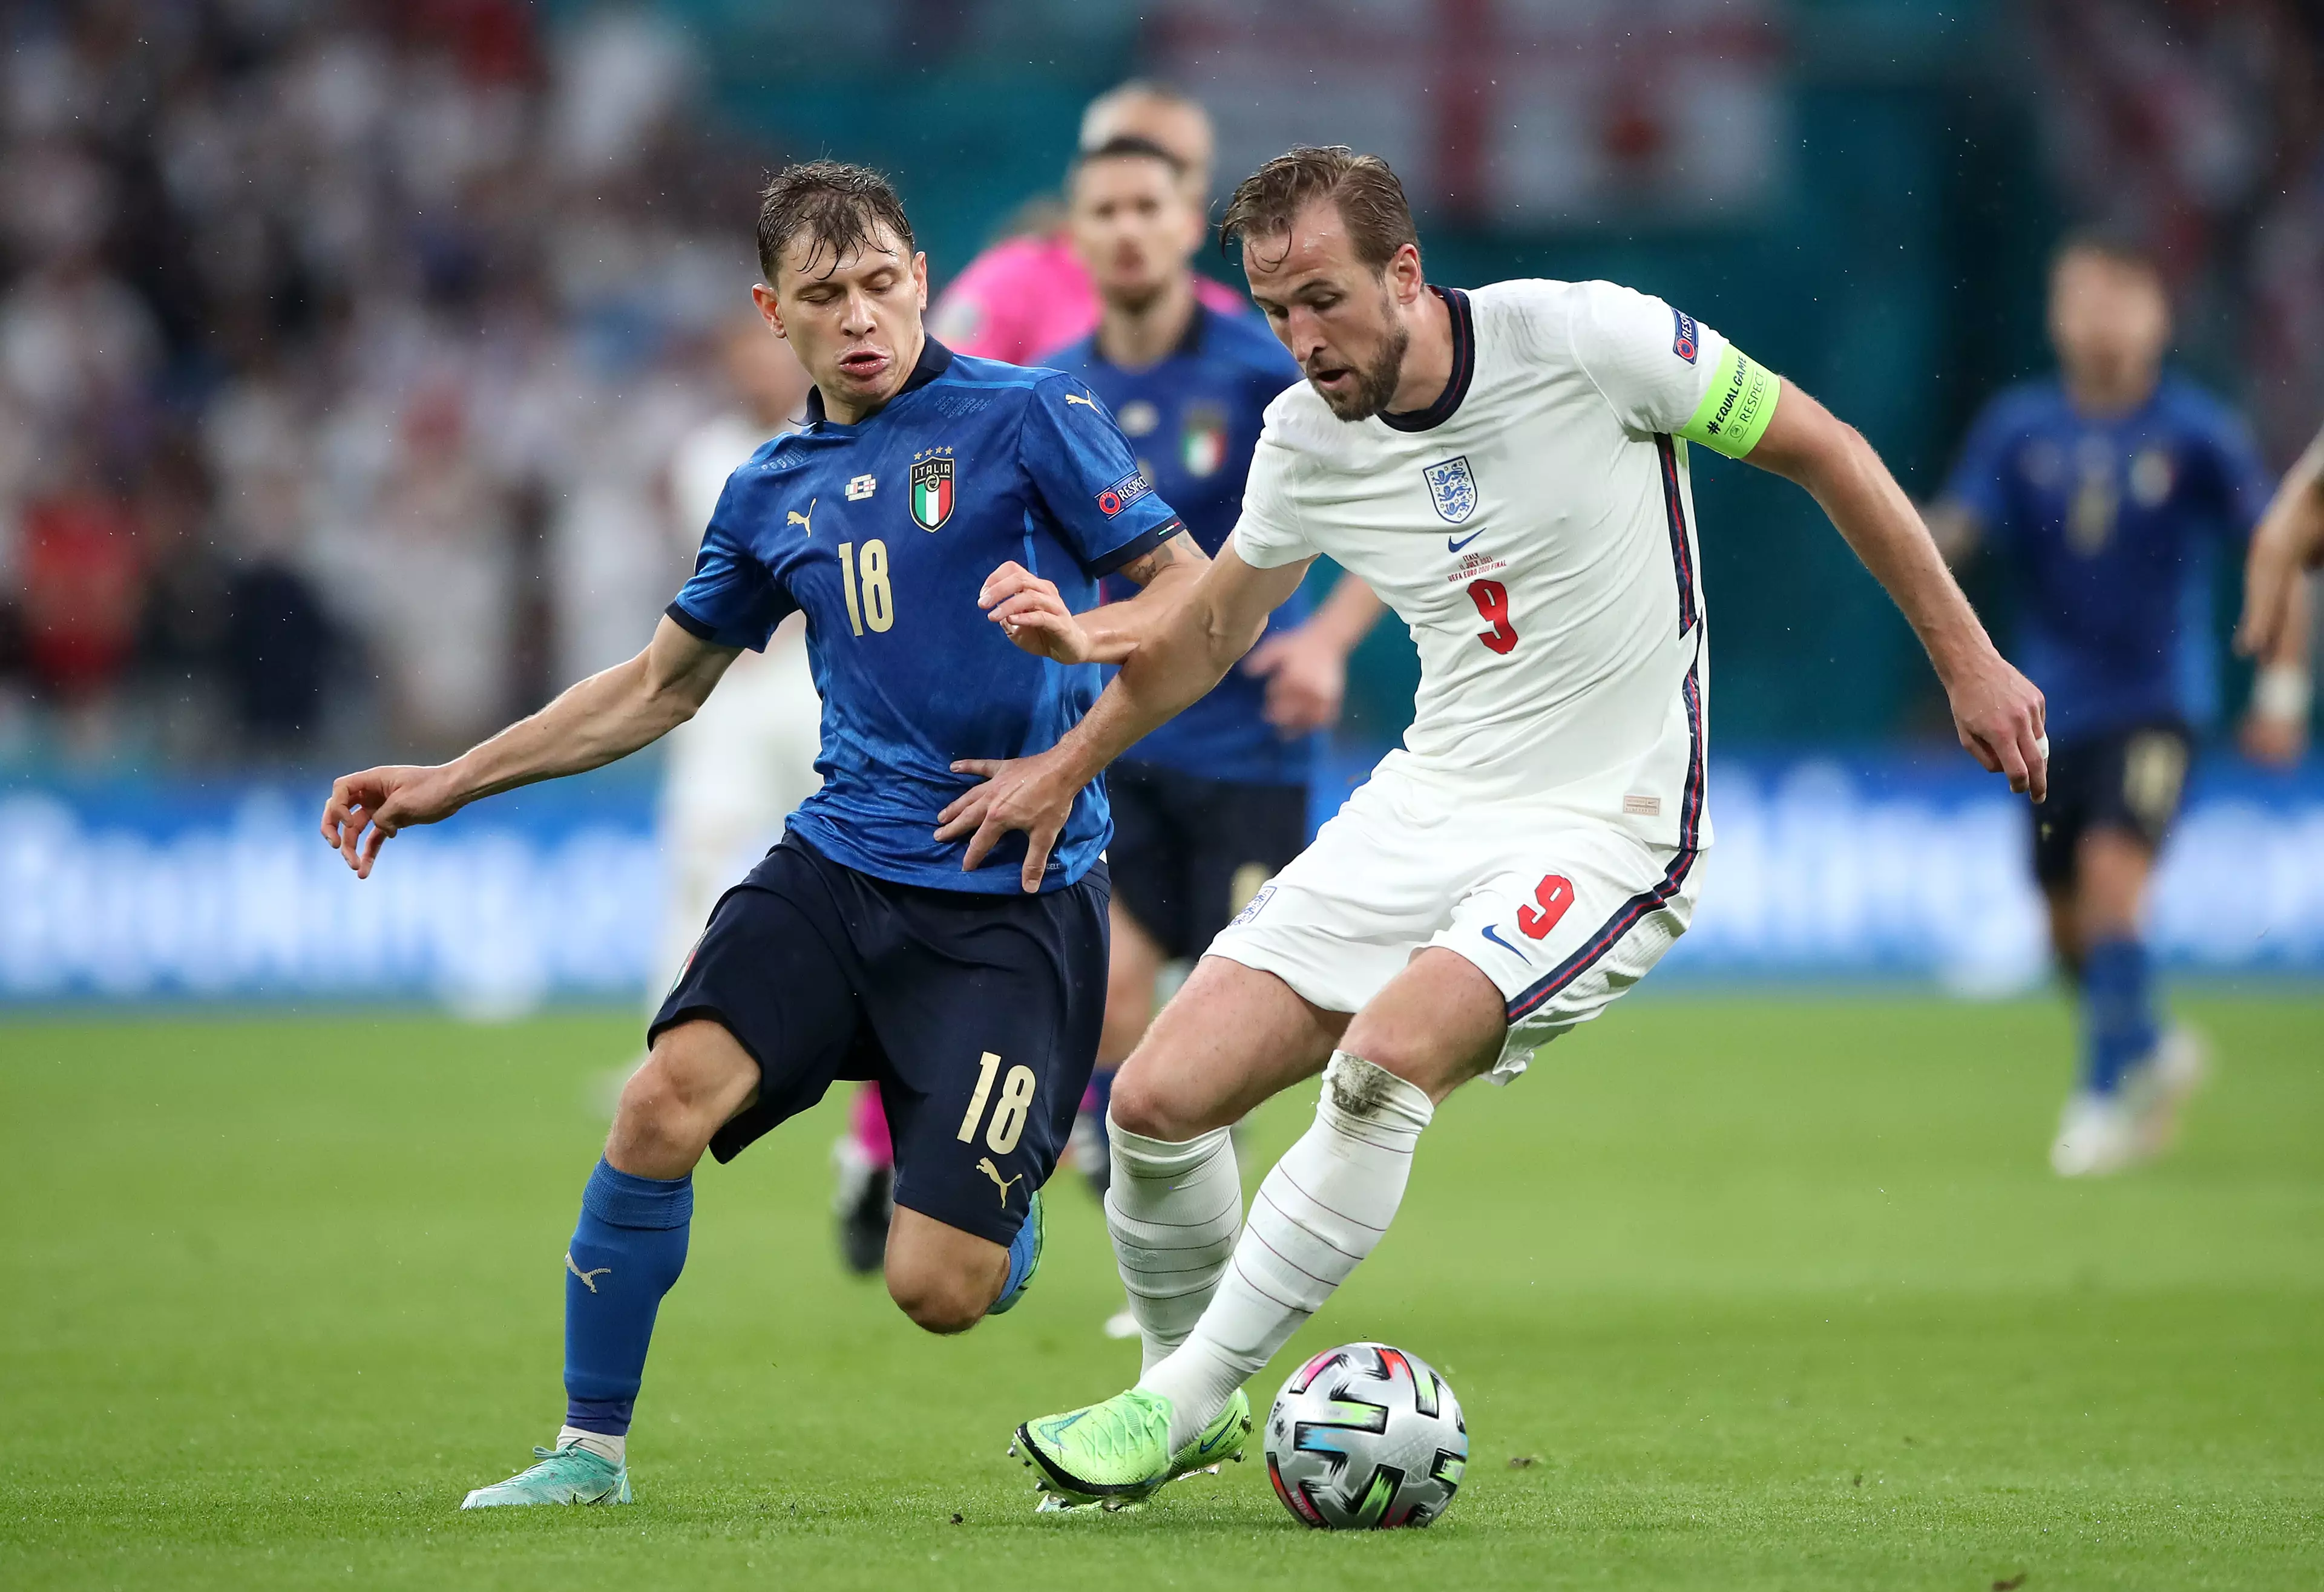 Nicolo Barella played a pivotal role in Italy's Euro 2020 triumph this summer